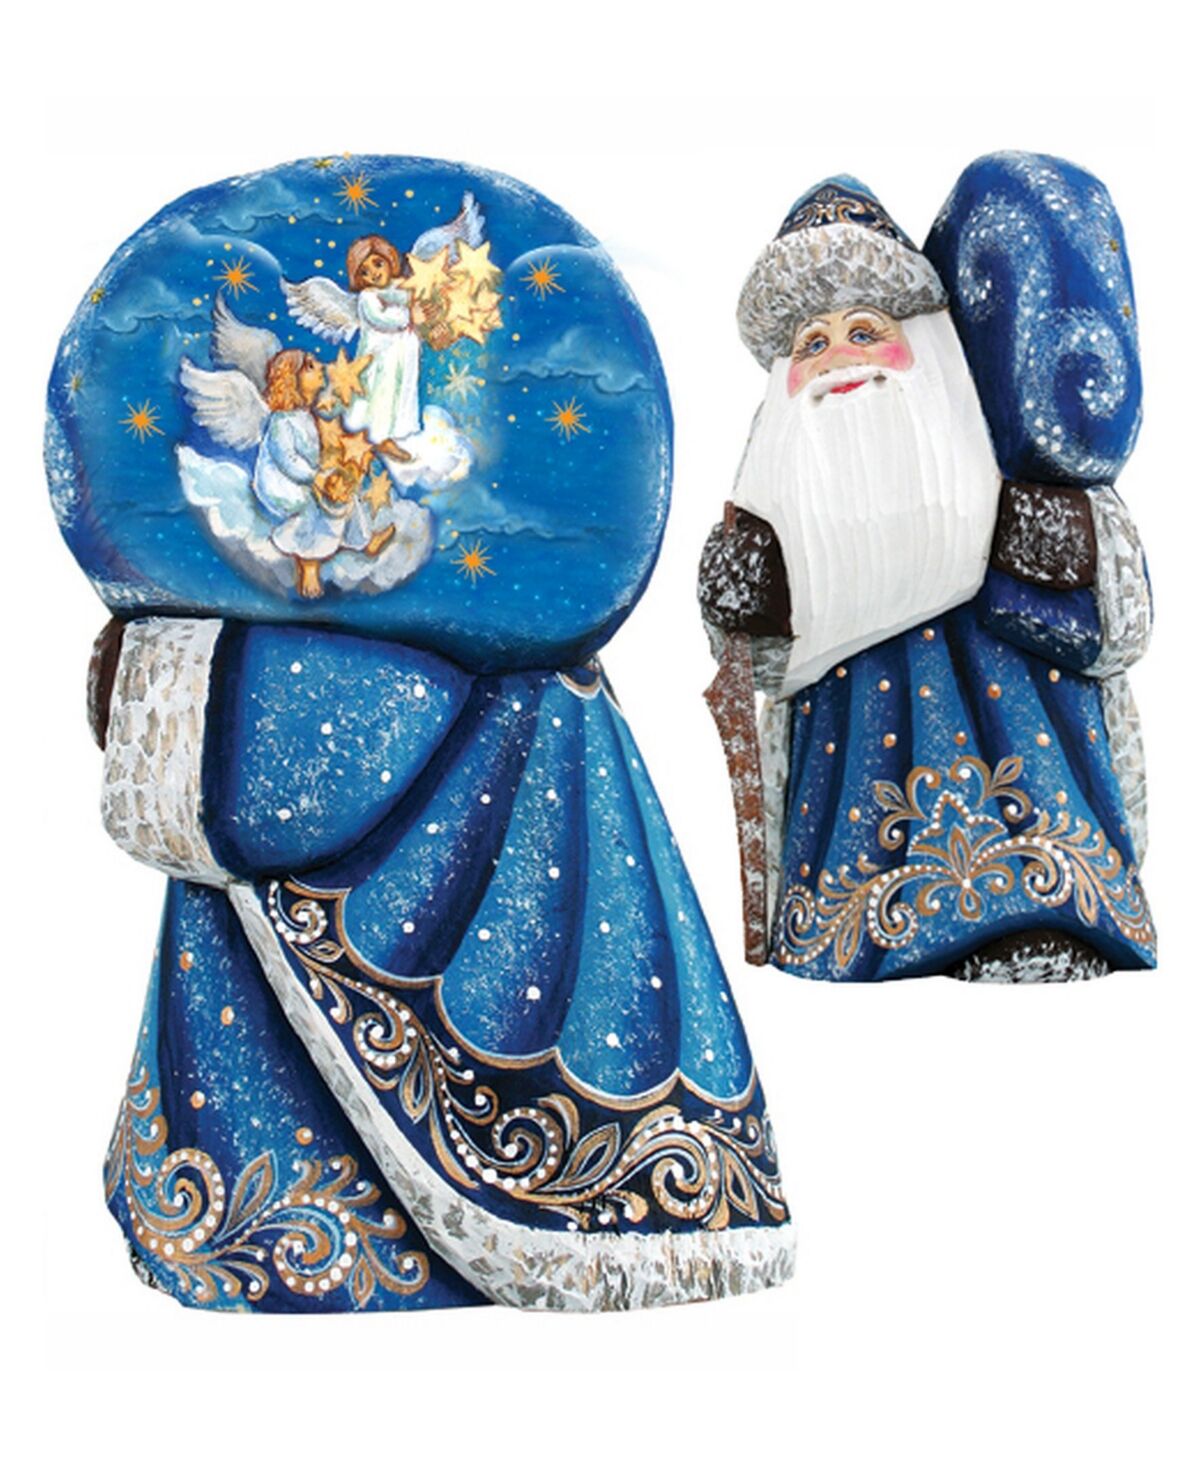 G.DeBrekht Woodcarved Hand Painted Raising Star Santa Figurine - Multi